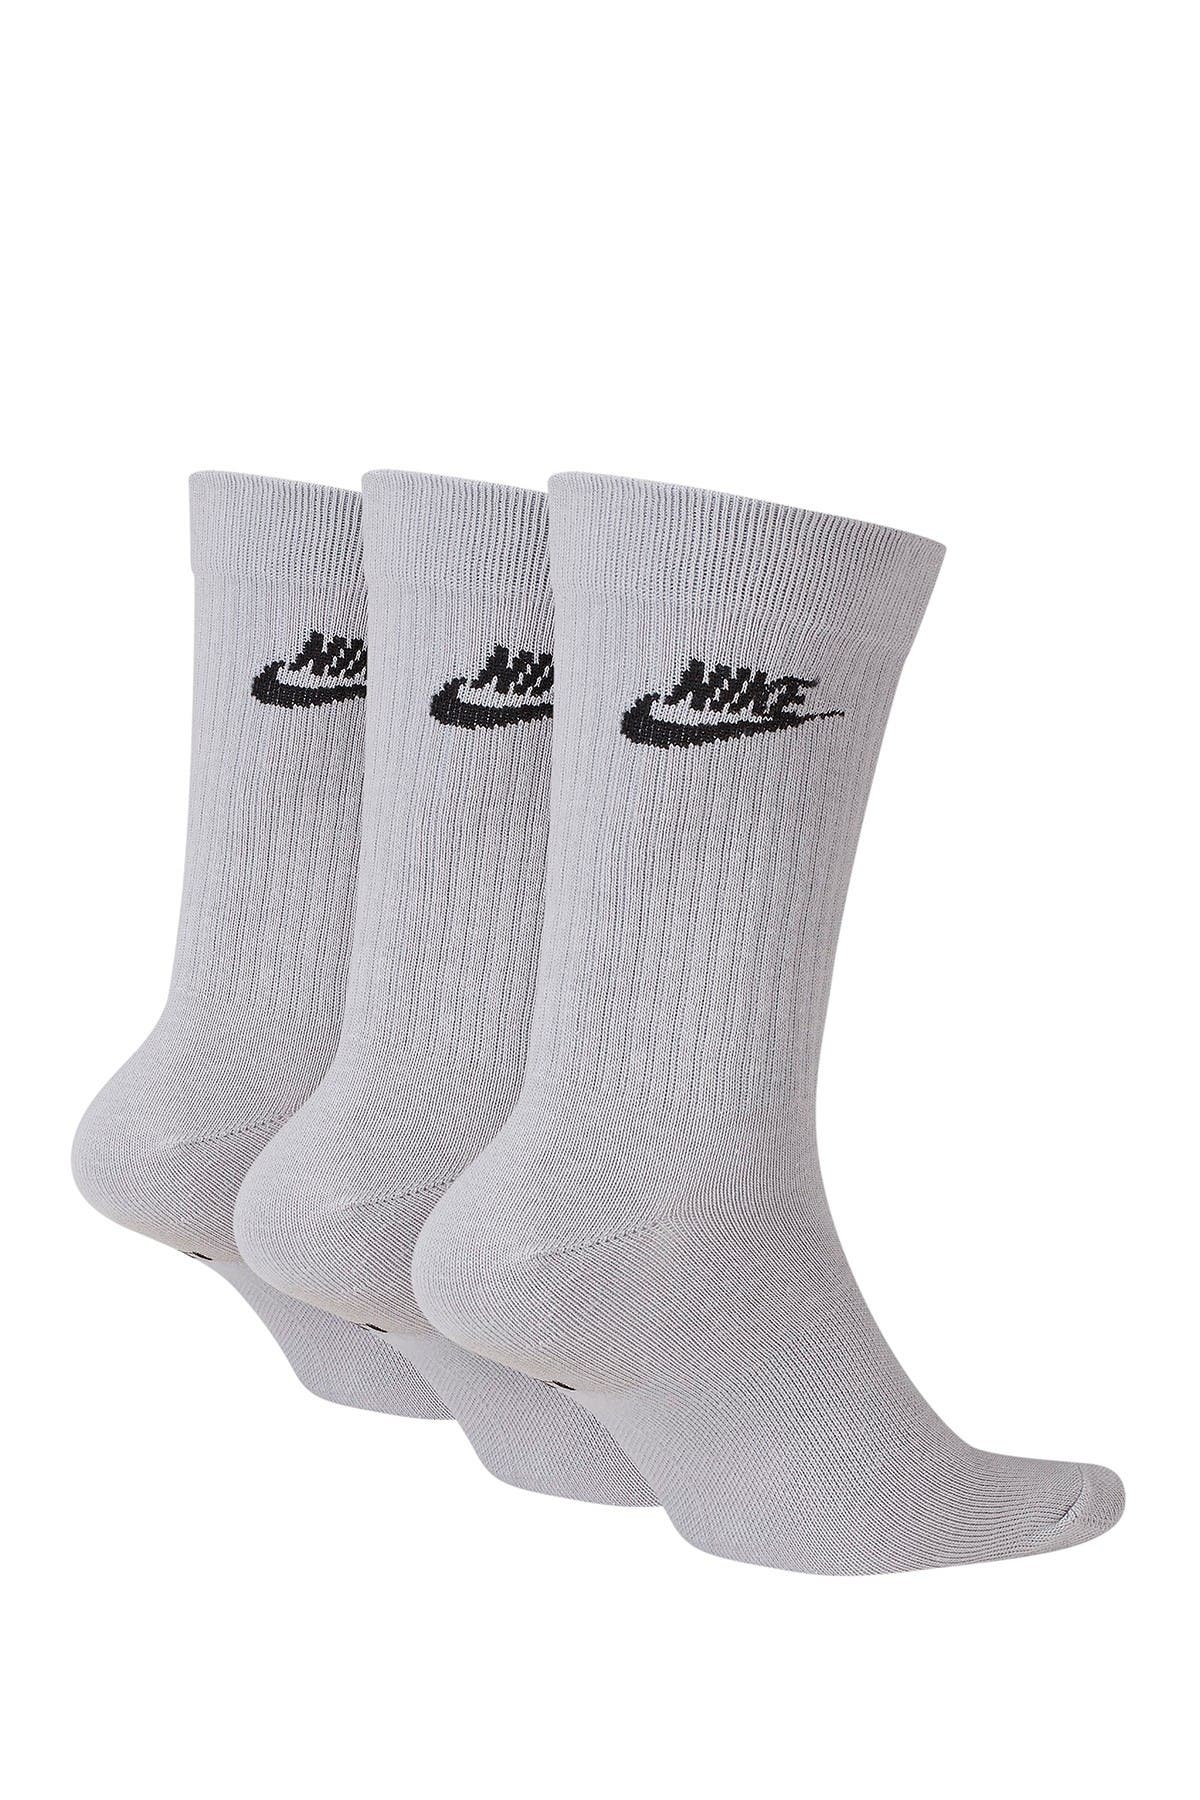 nike socks pack of 3